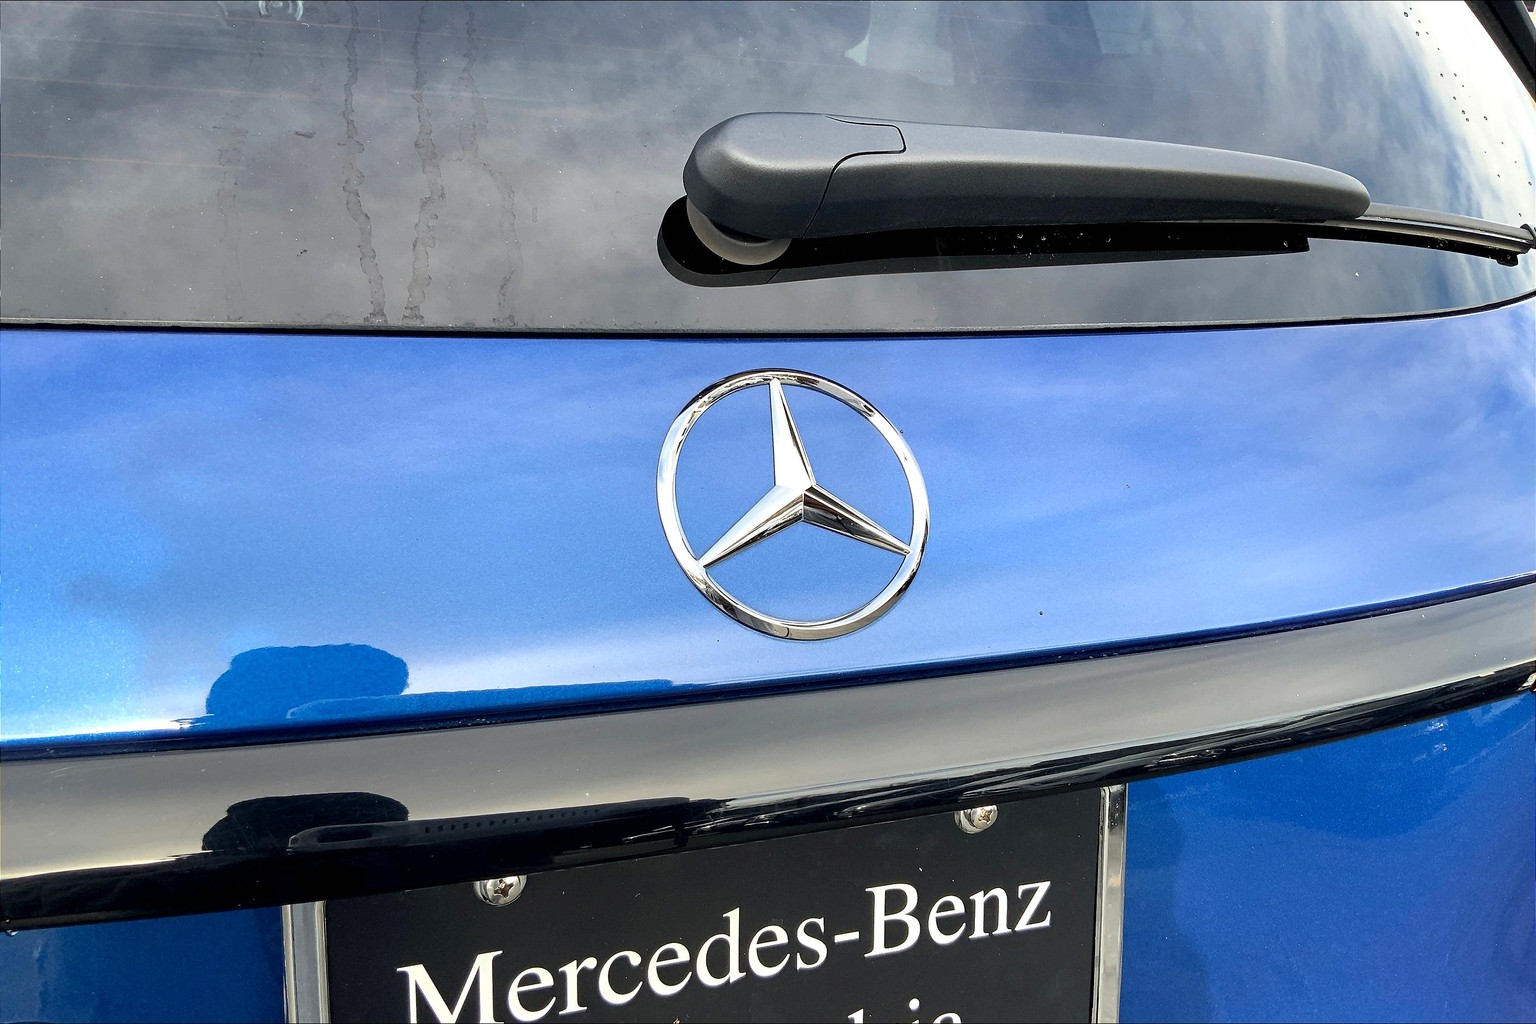 2023 Mercedes-Benz GLC 300, used, $56,280, VIN W1NKM4HB4PU028616